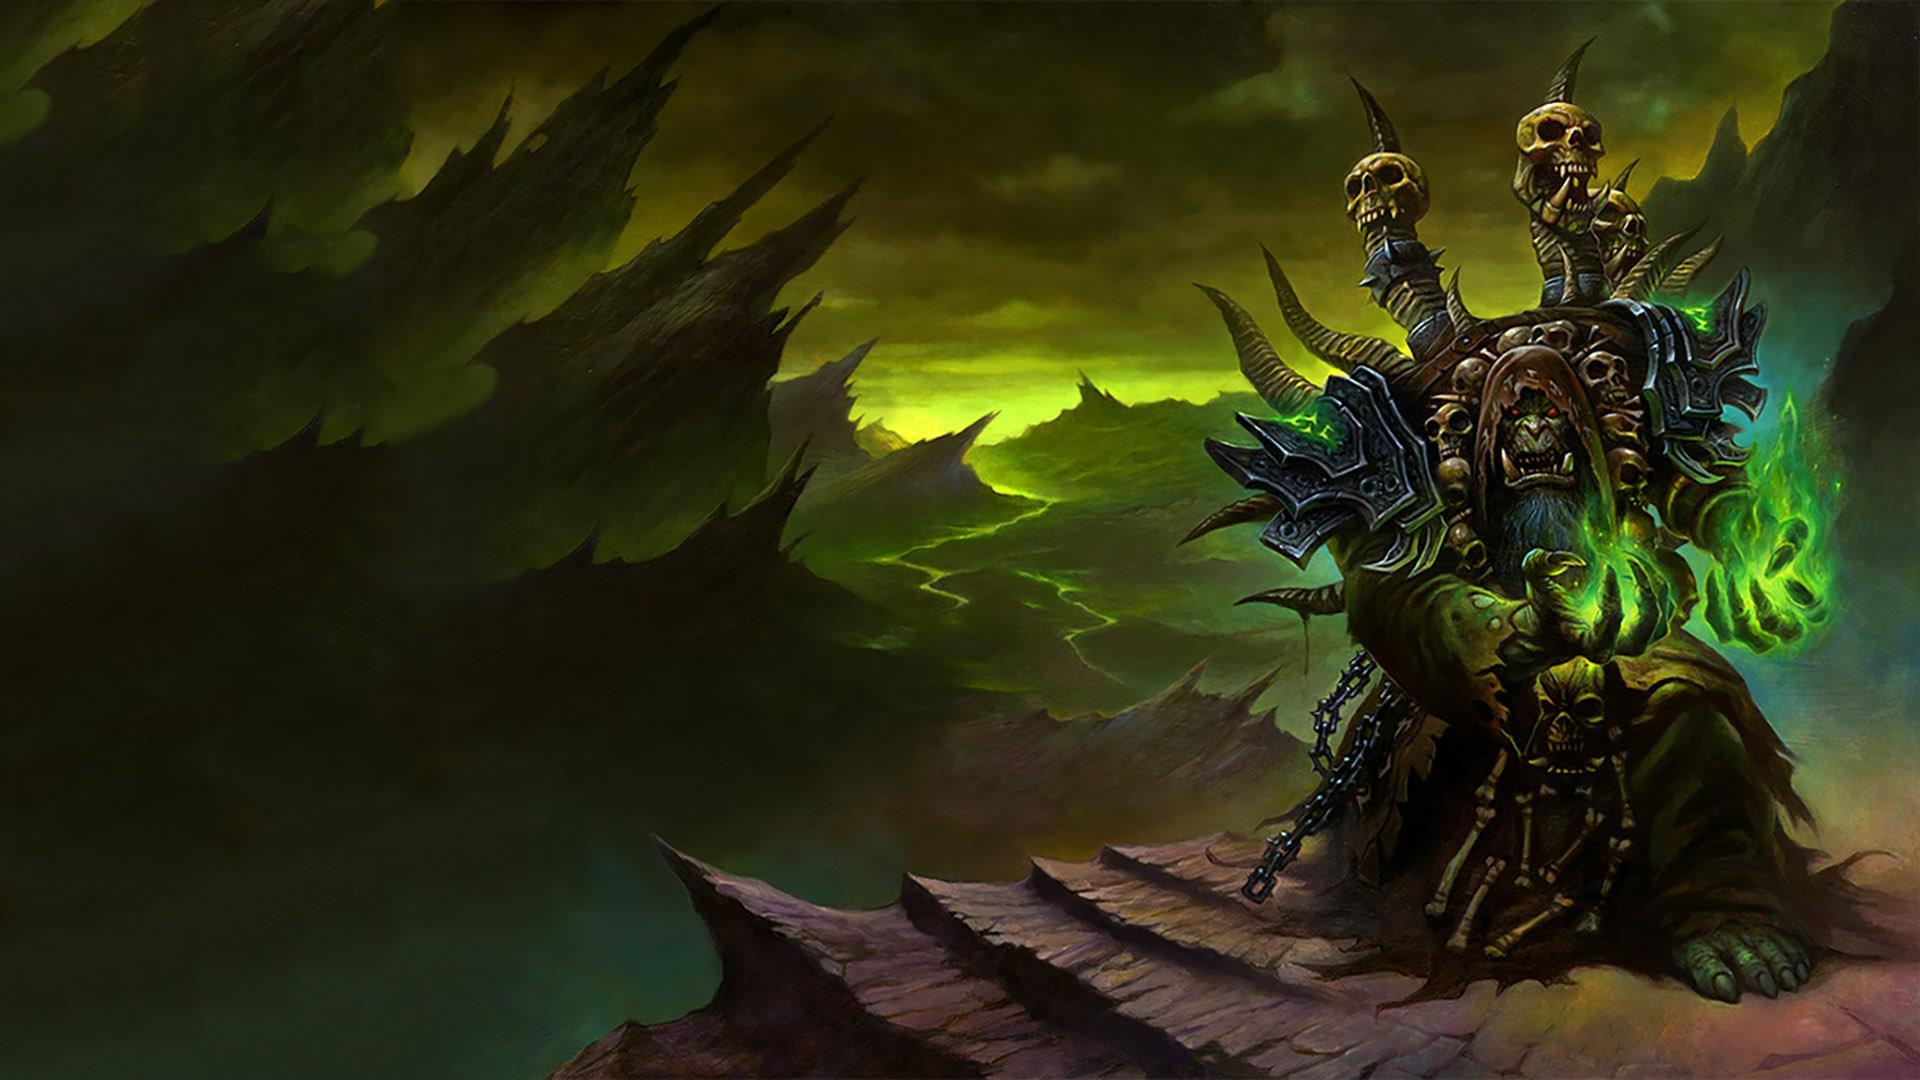 Best World Of Warcraft (WOW) wallpaper for High Resolution